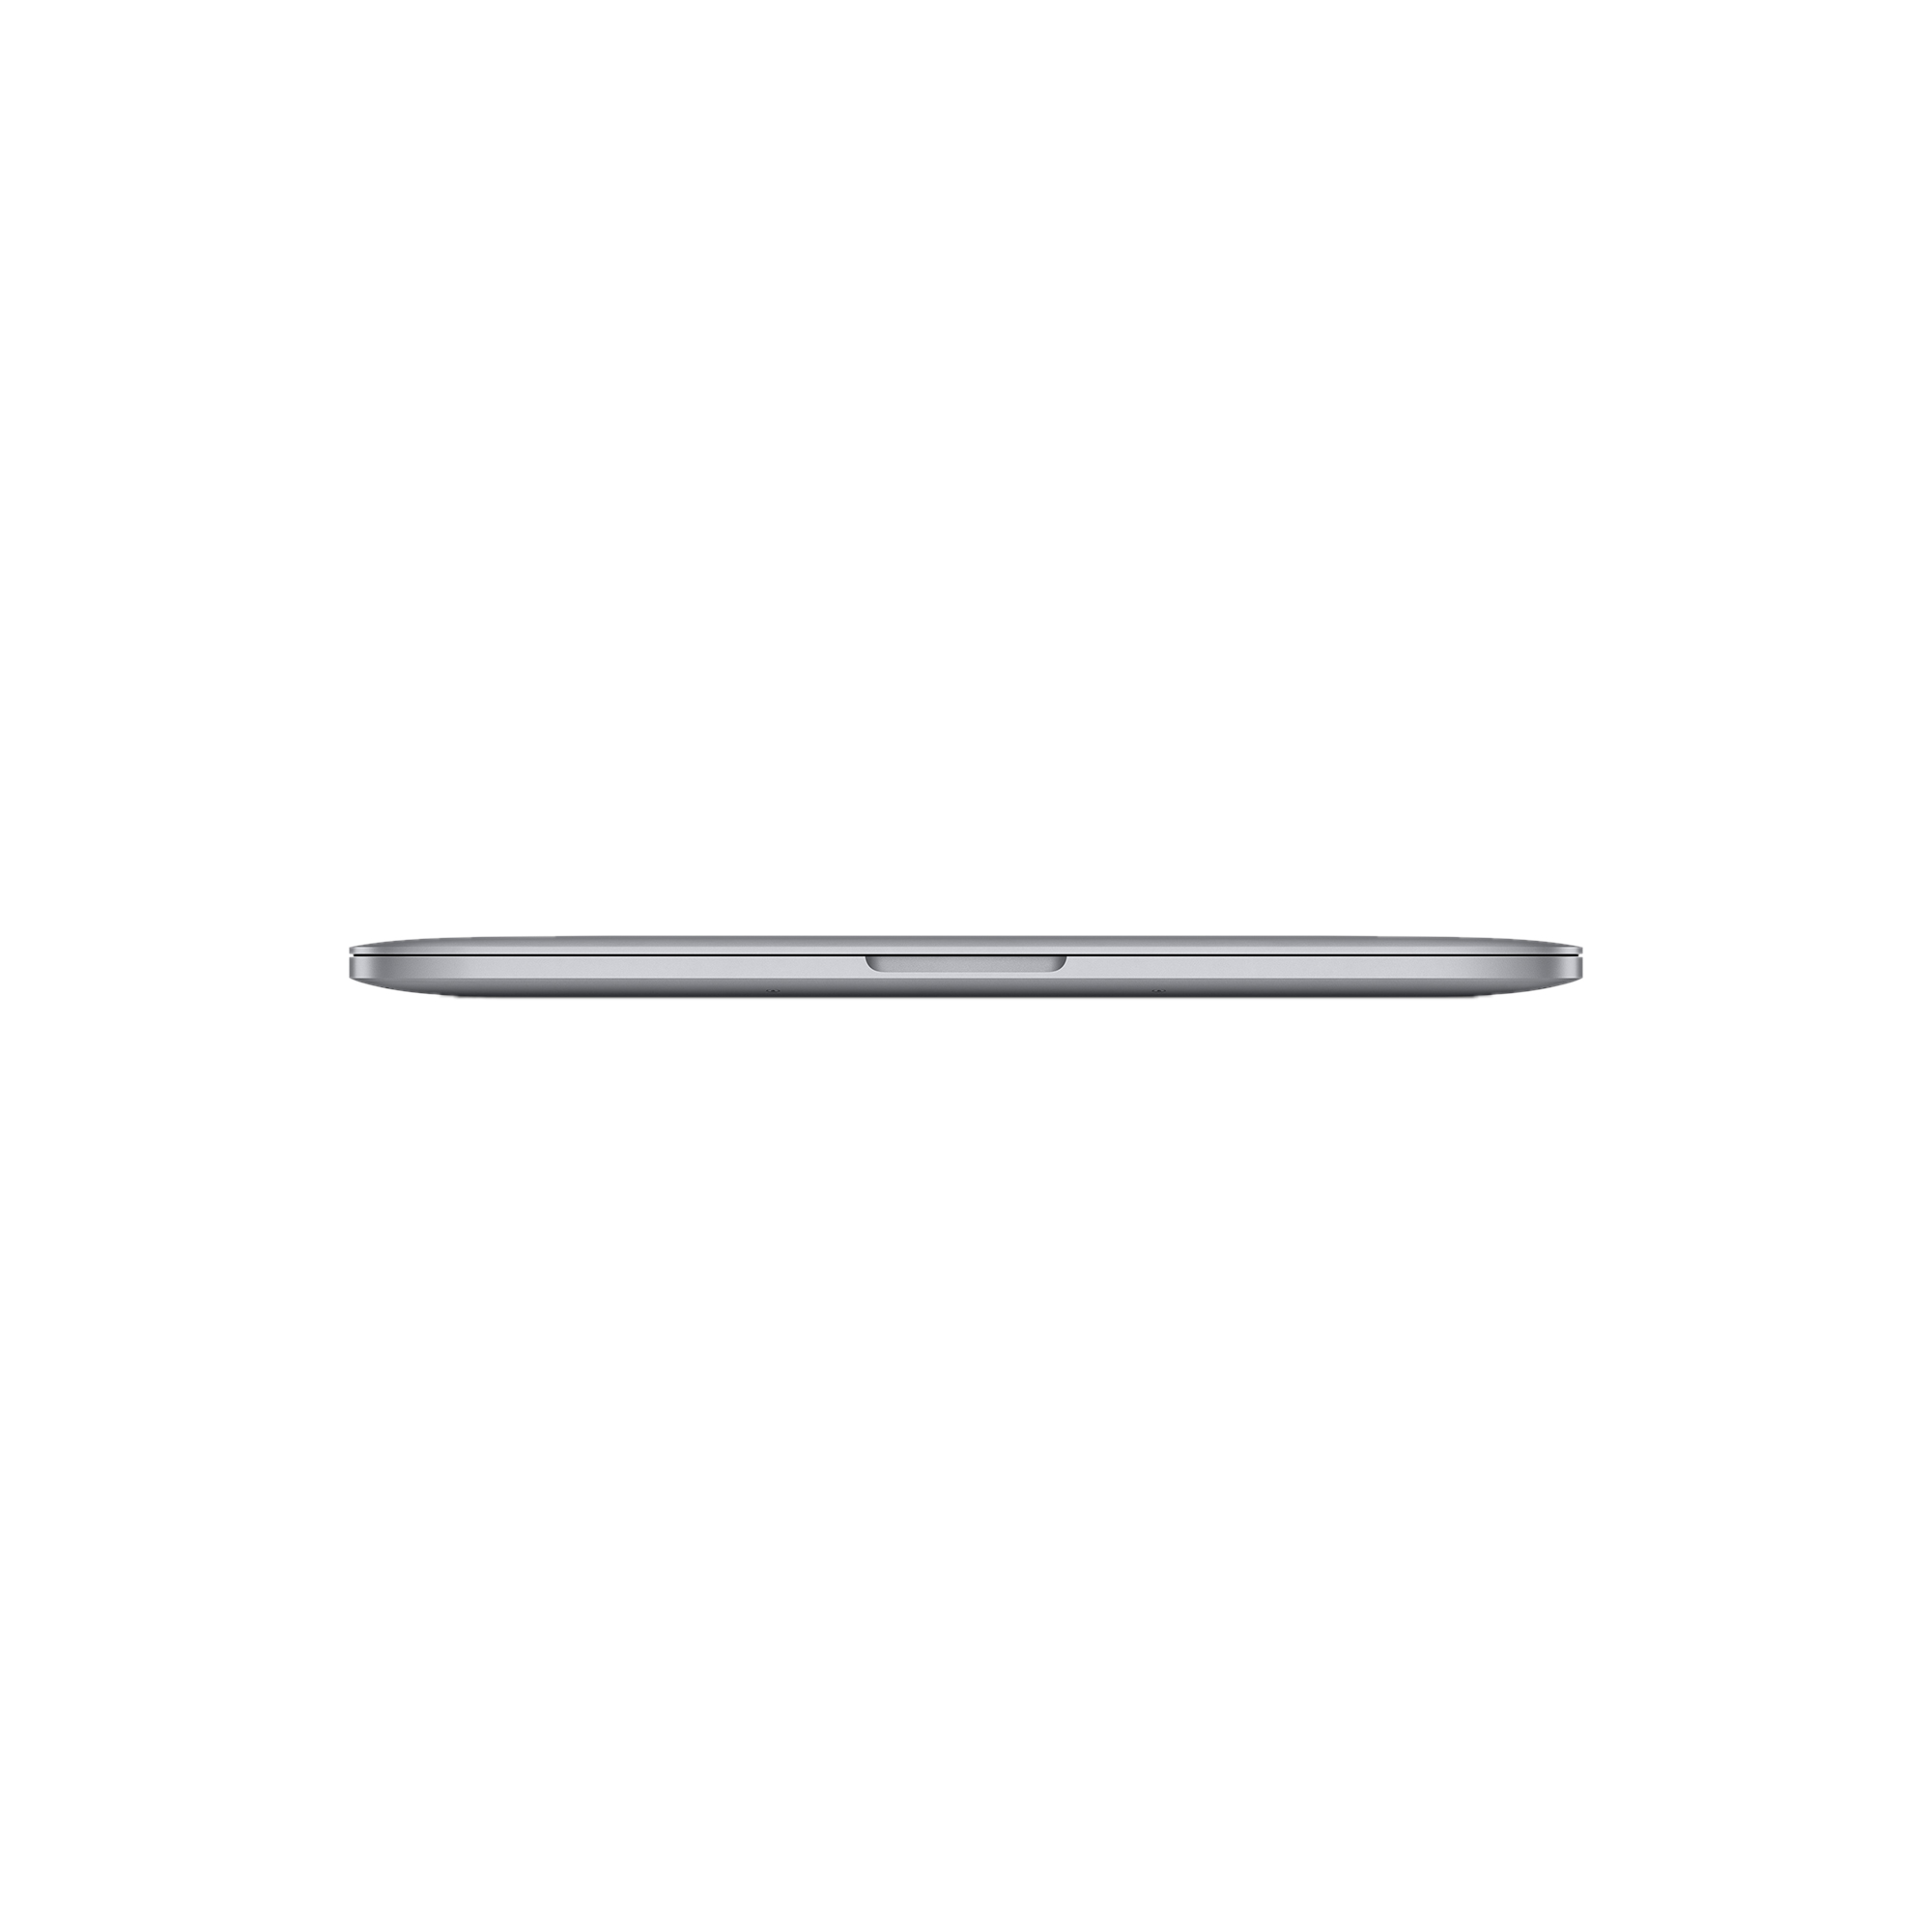 Apple MacBook Pro (13-inch 2022) M2 Chip / 8GB RAM / 256GB SSD / Space Gray